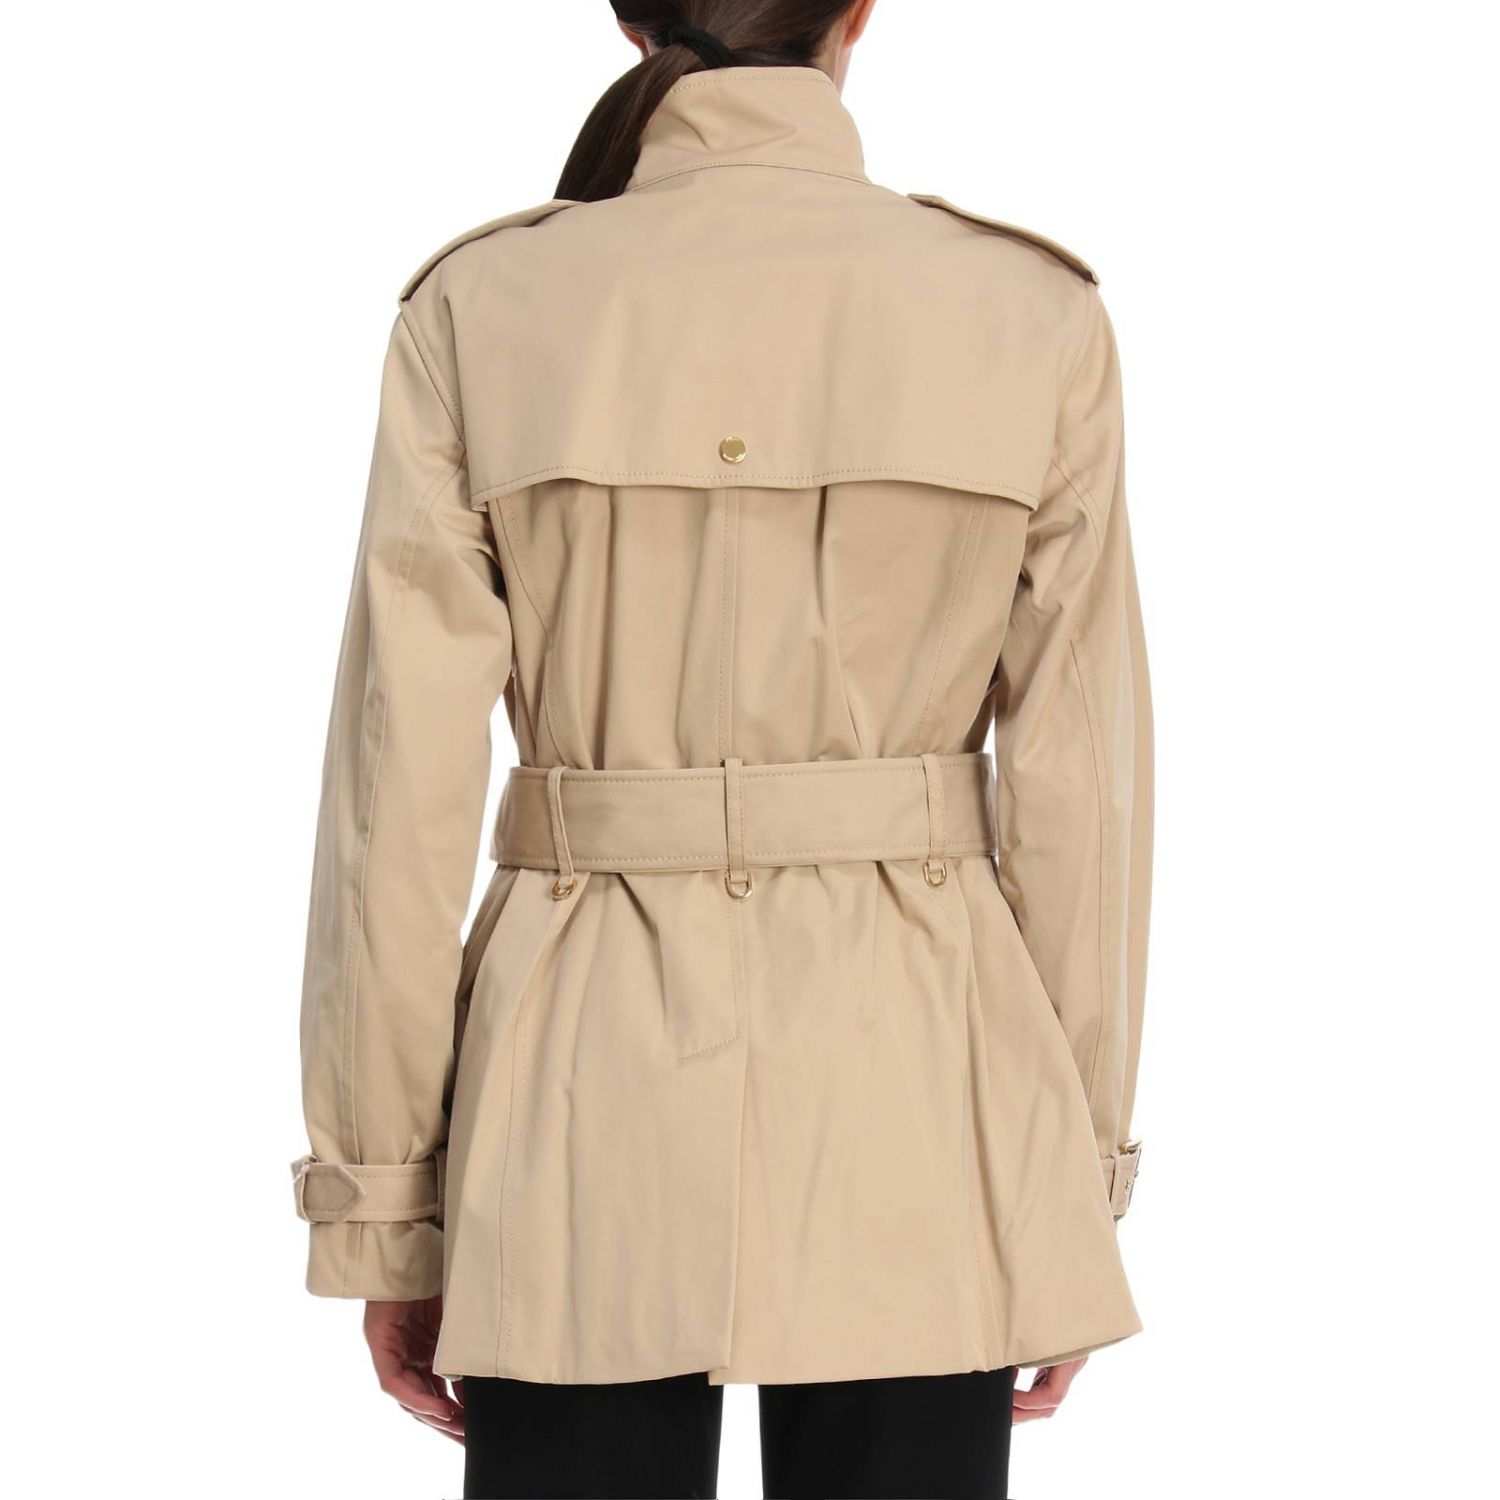 Michael Michael Kors Outlet: Trench coat women | Trench Coat Michael ...